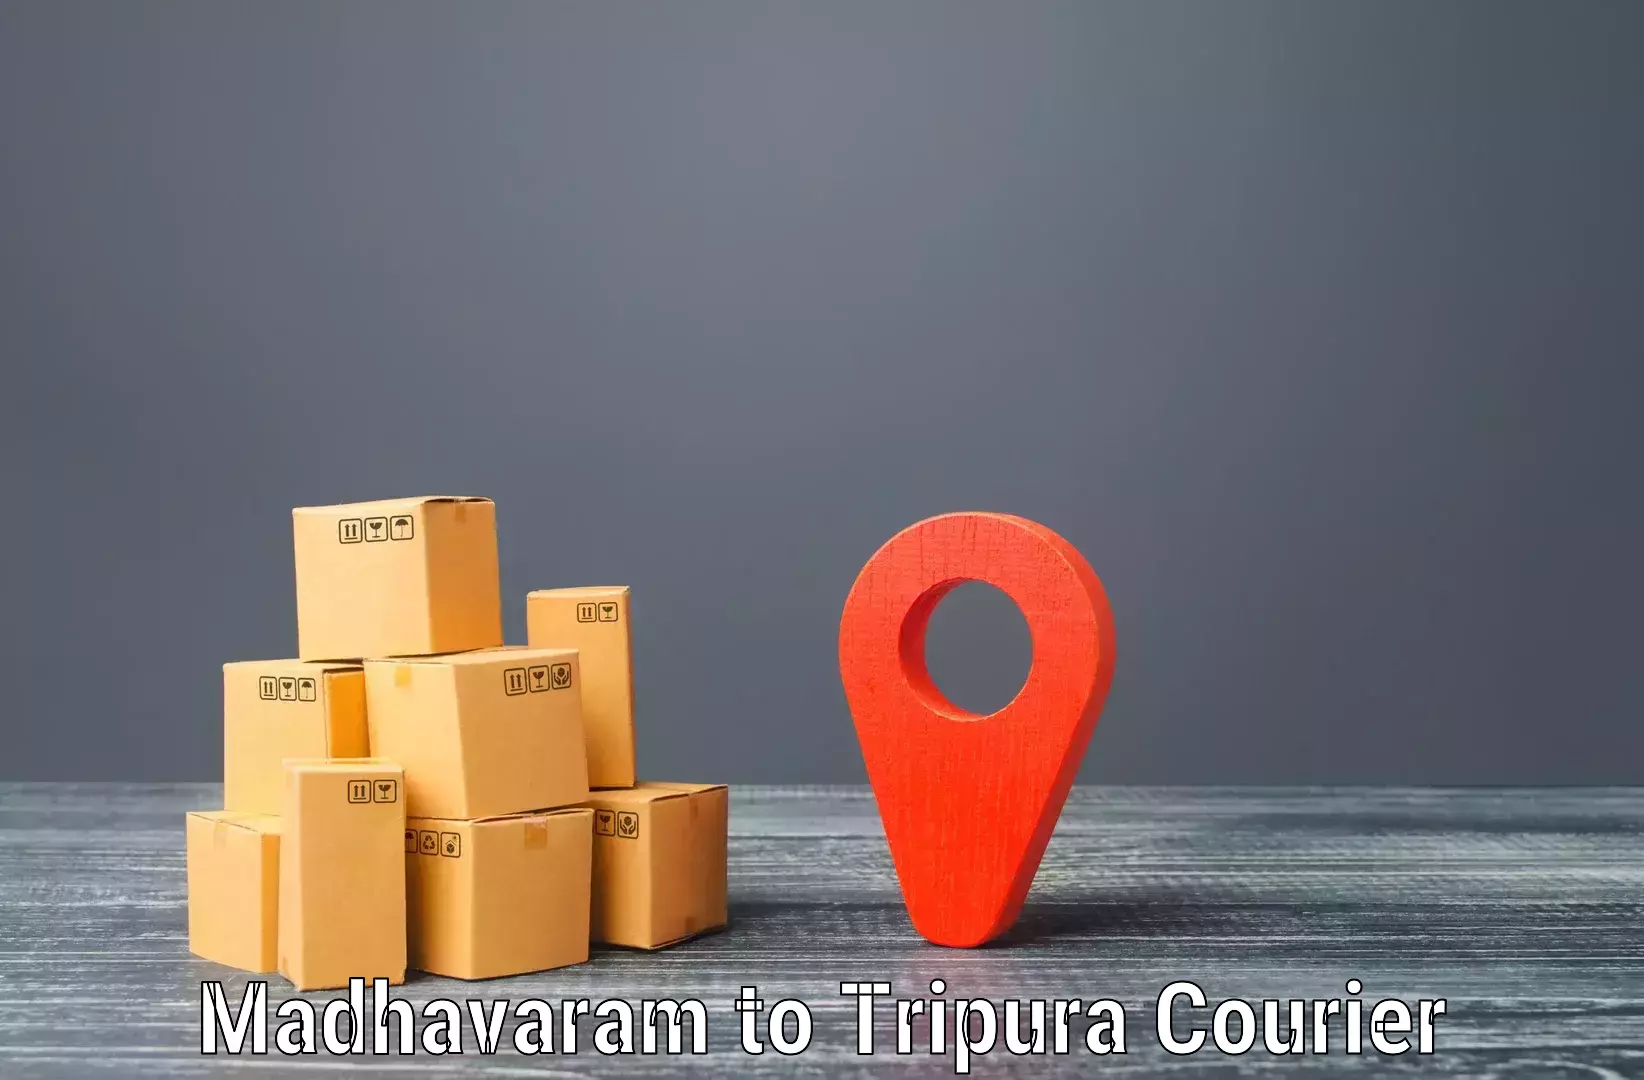 Global logistics network Madhavaram to Tripura